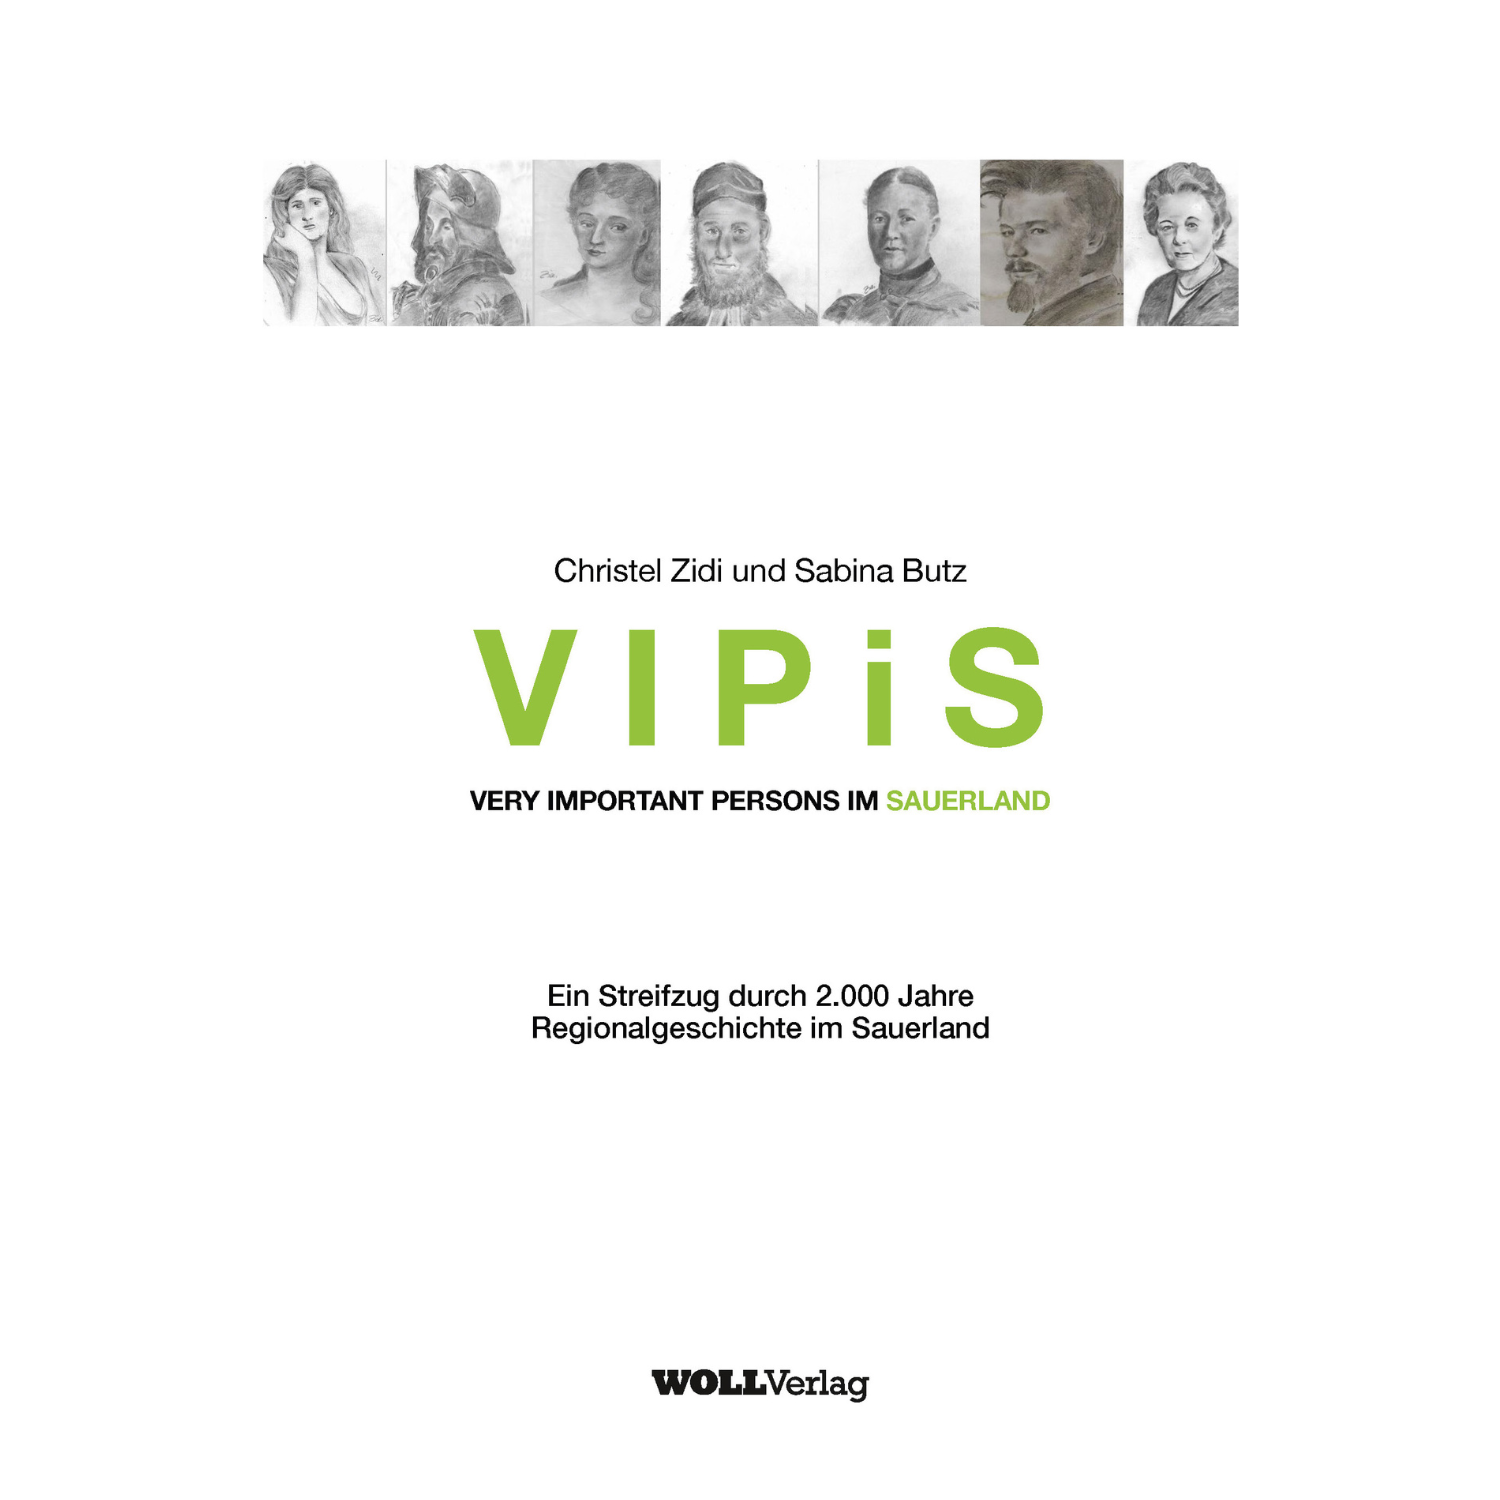 VIPiS VERY IMPORTANT PERSONS im SAUERLAND (Christel Zidi und Sabina Butz)